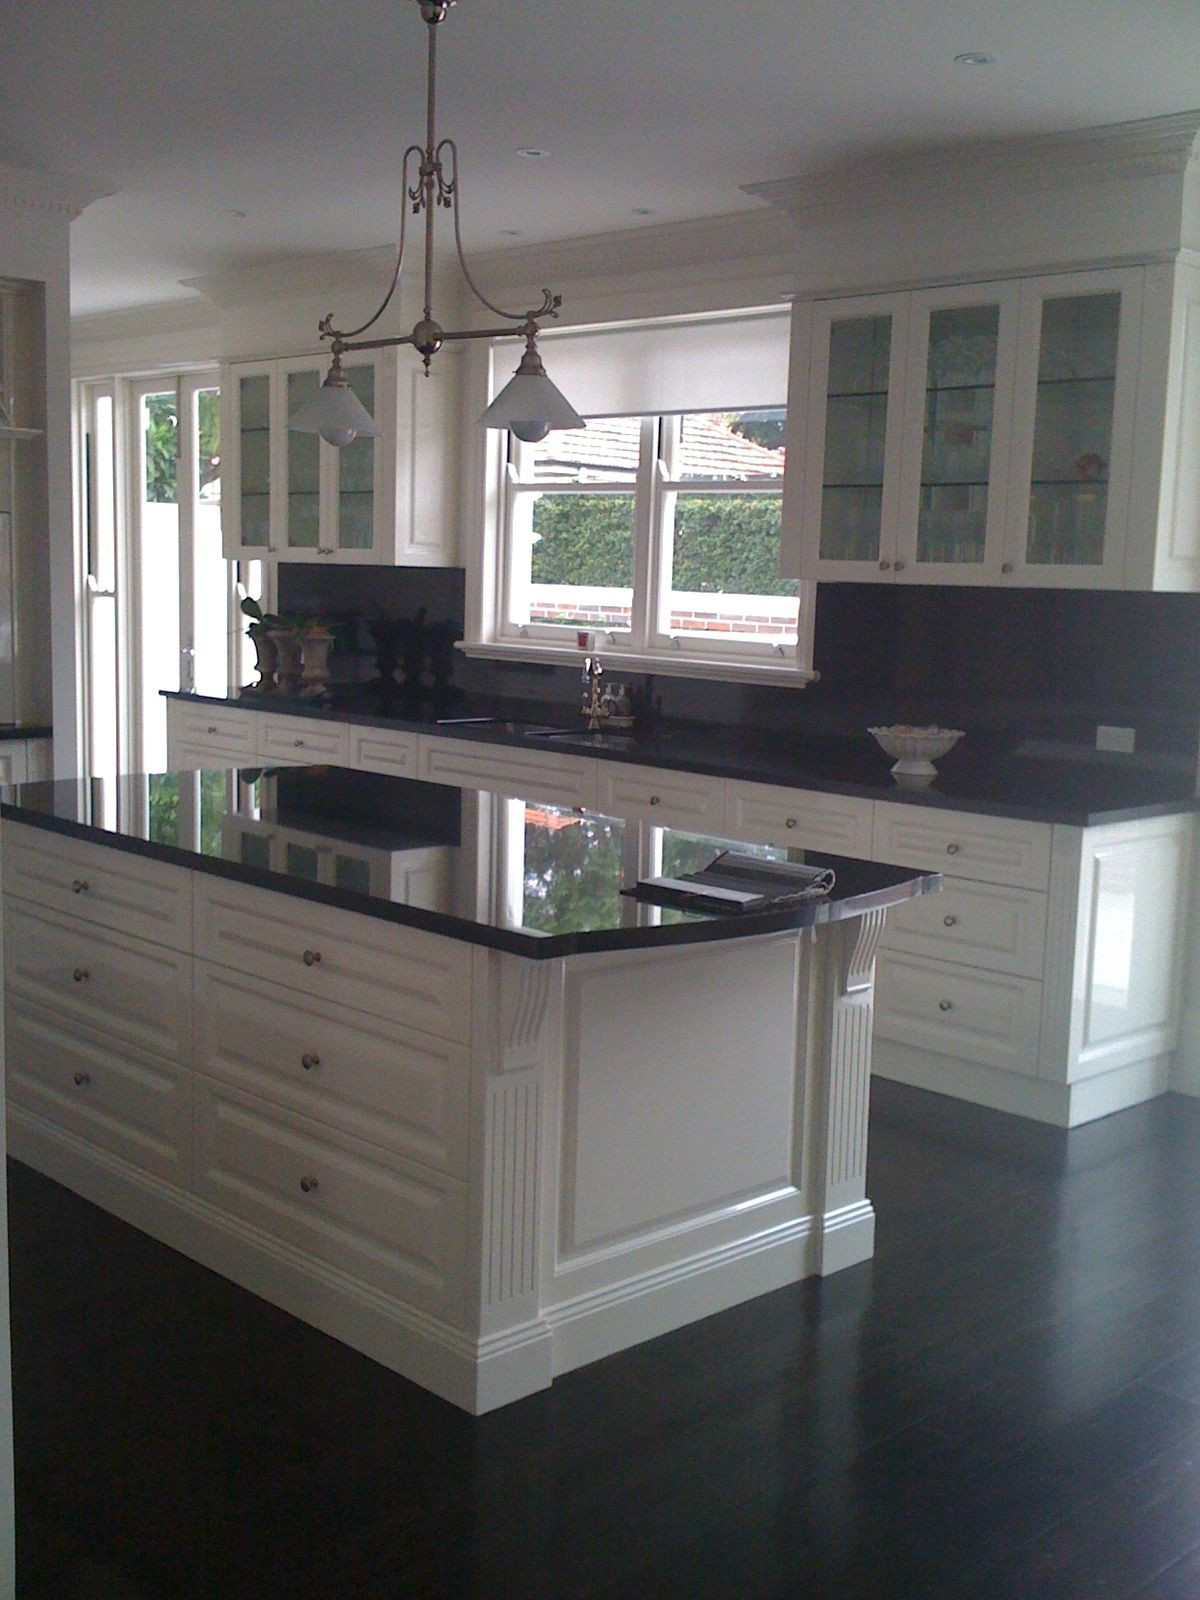 White Kitchen With Black Granite
 Indah island white cabinets with black granite benchtops